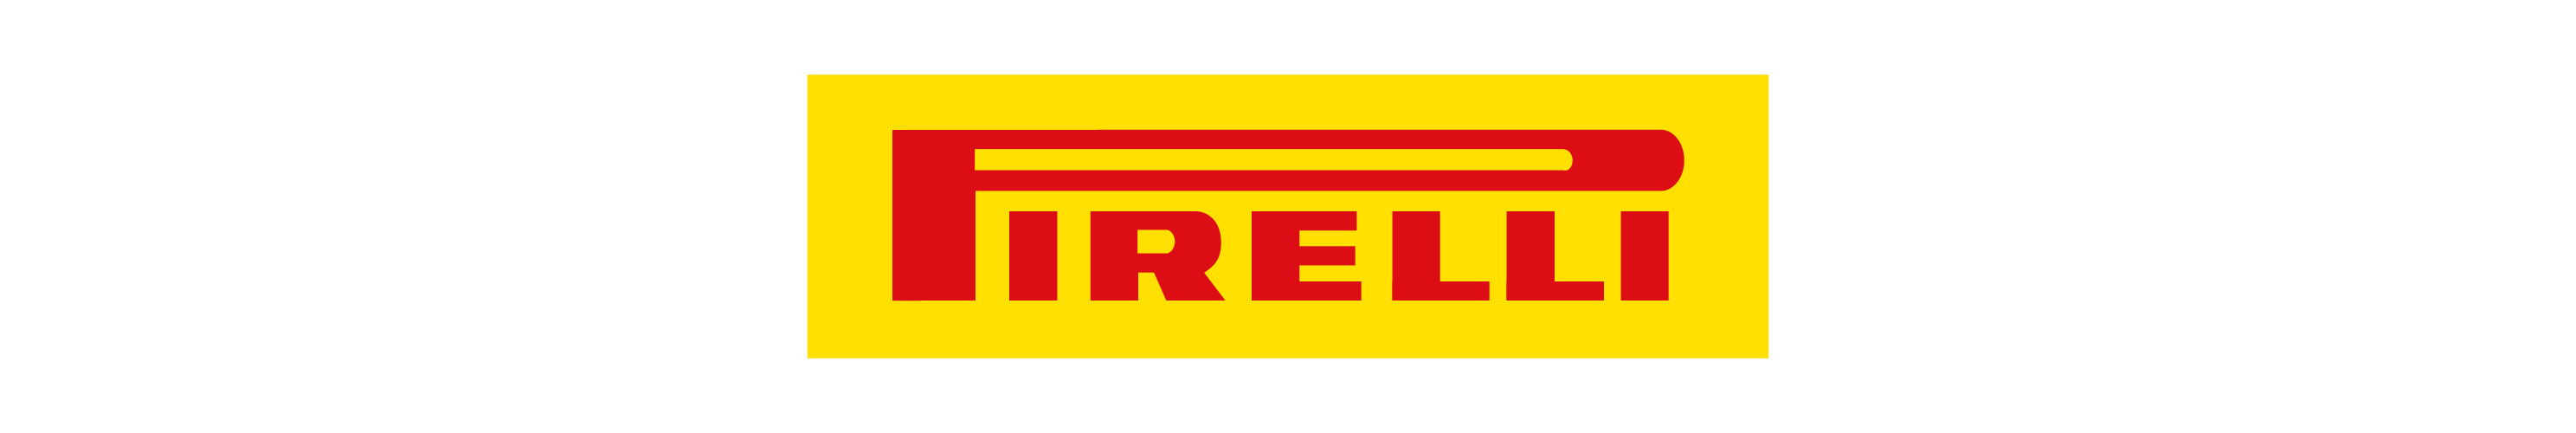 Q Team-Merken-Pirelli-2976x500